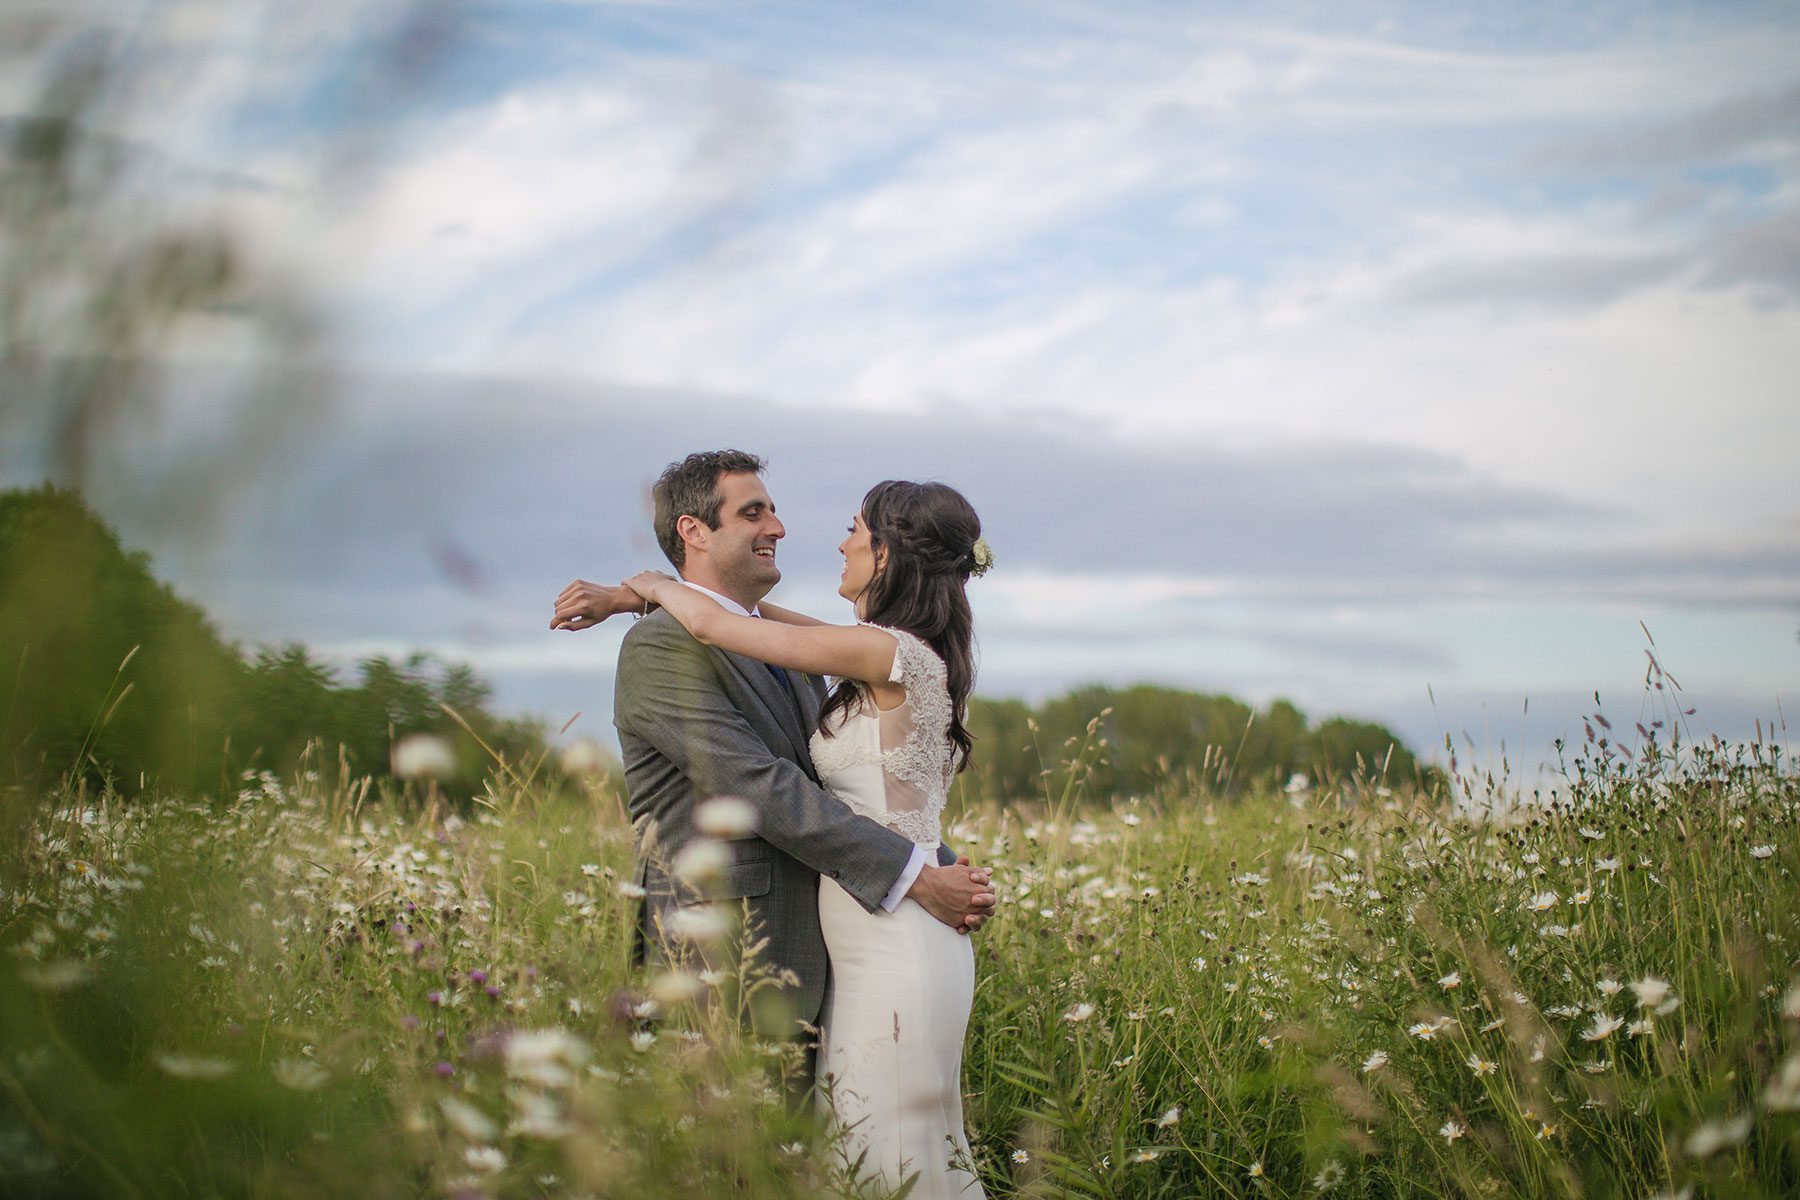 Reportage Wedding Photography in Cheltenham | Bullit Photography